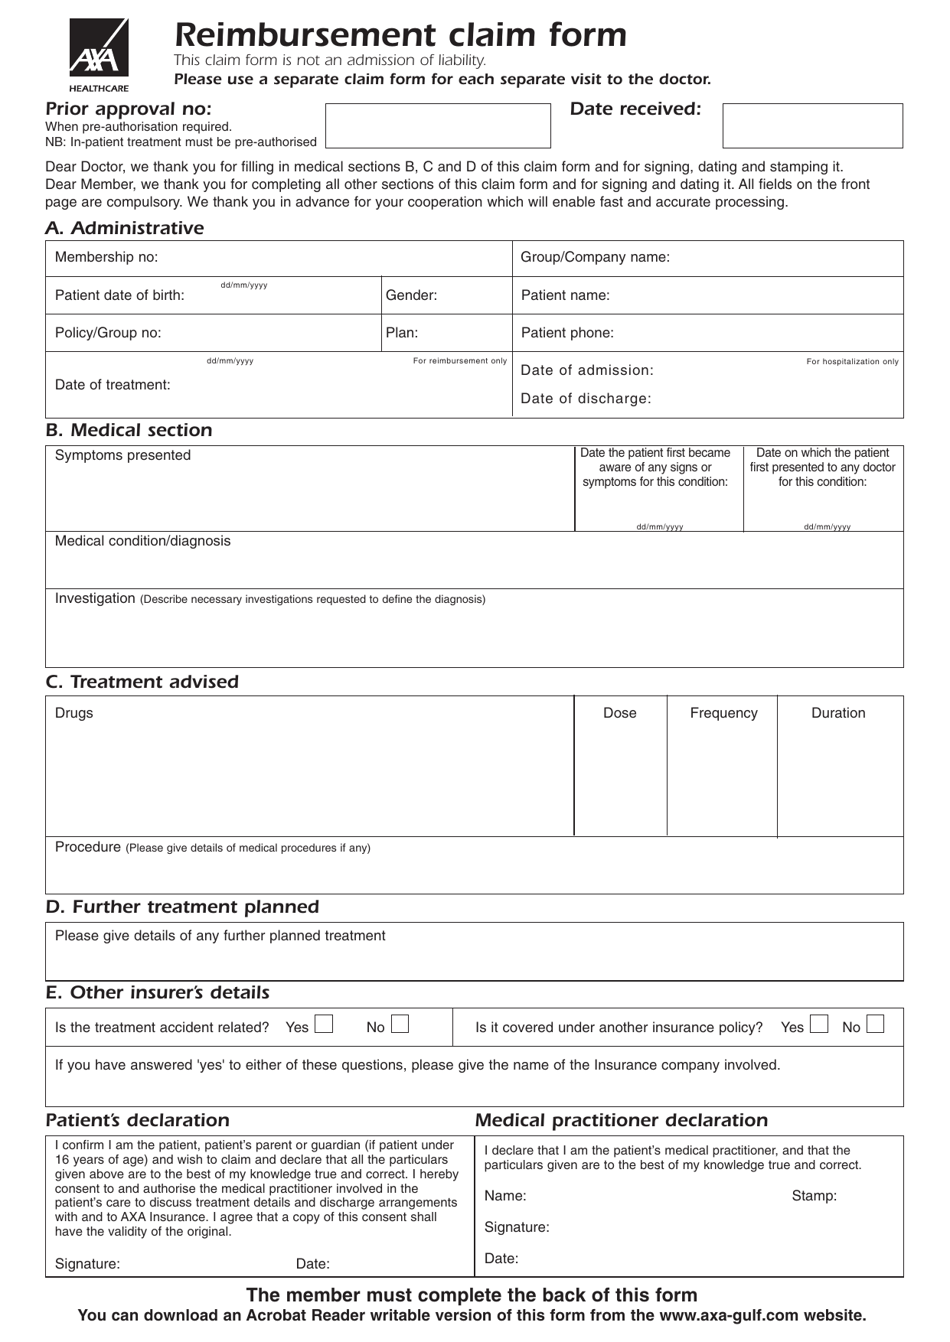 Reimbursement Claim Form Axa Healthcare Download Fillable PDF